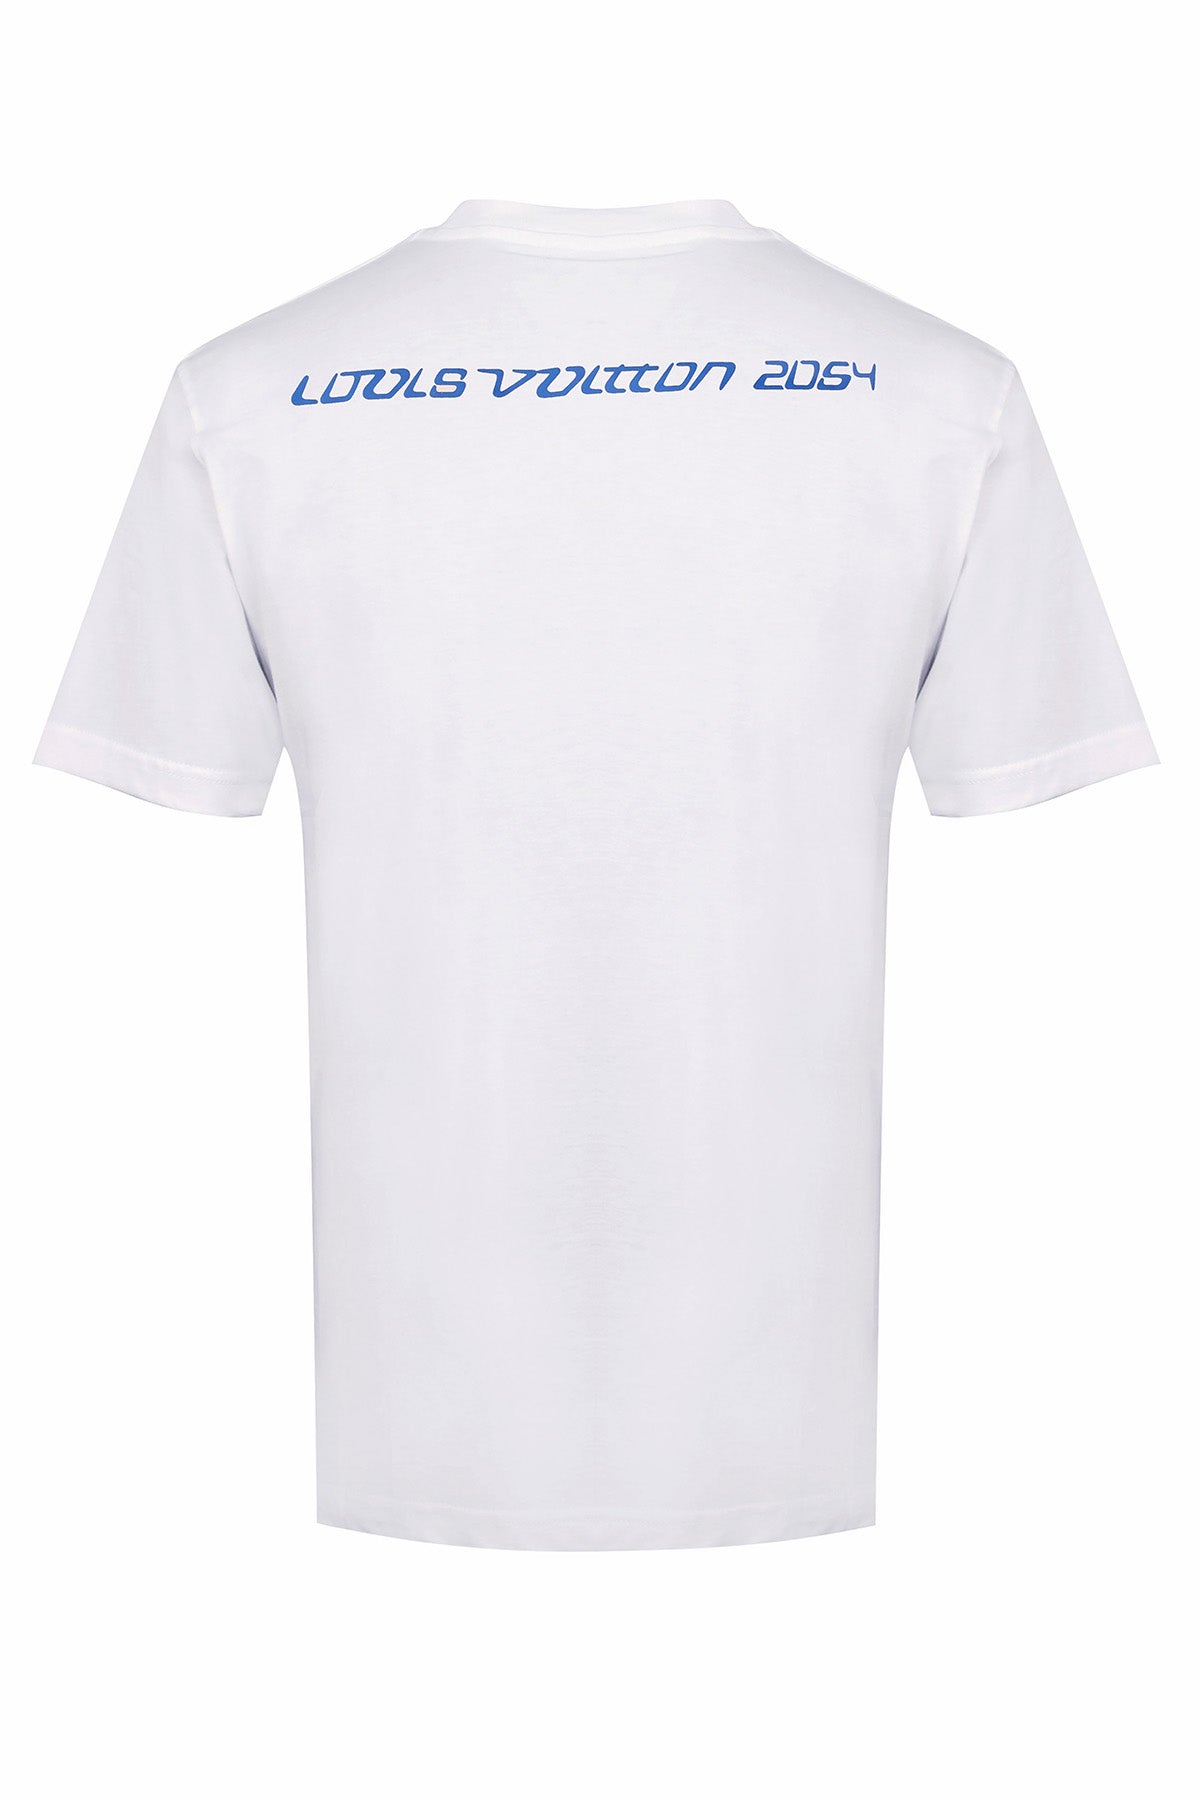 Louis Vuitton #80 T-shirt SizeXL Cotton white RM212 GO5